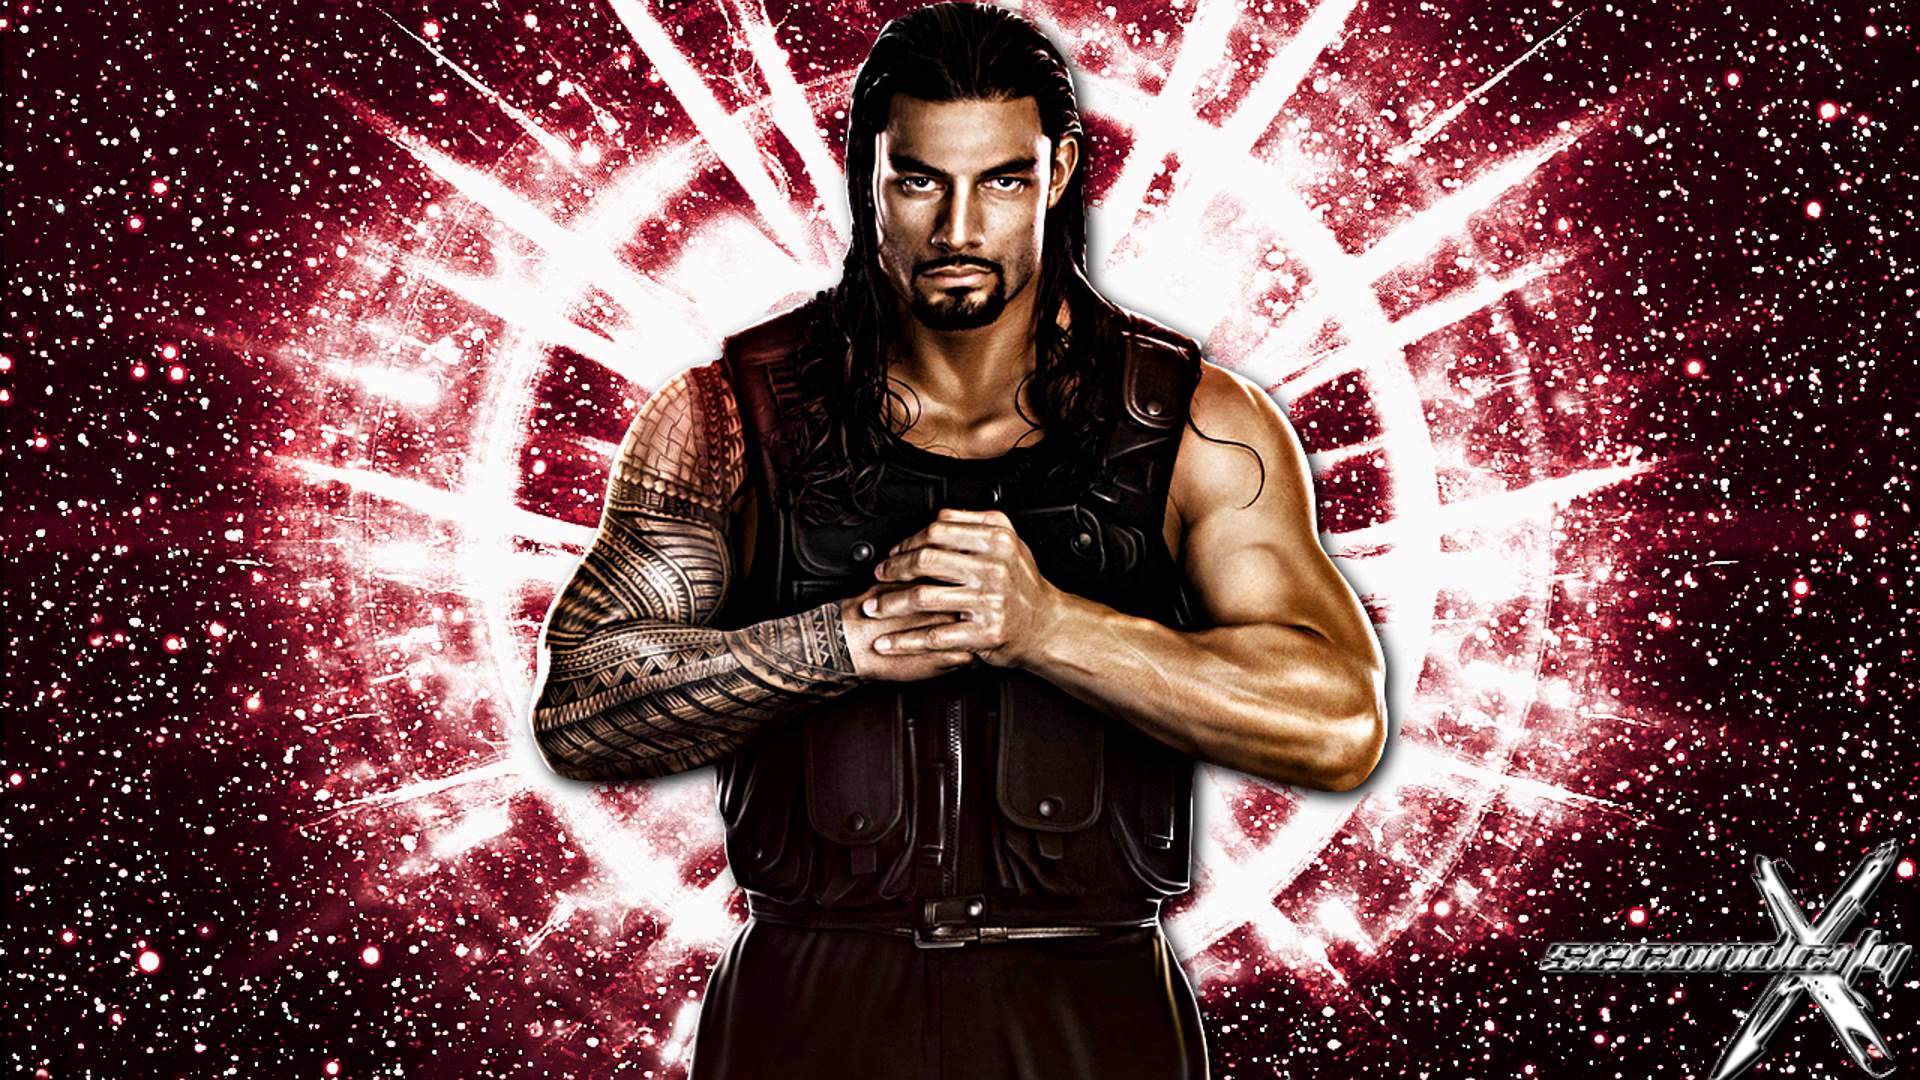 47+] WWE Roman Reigns Wallpaper - WallpaperSafari